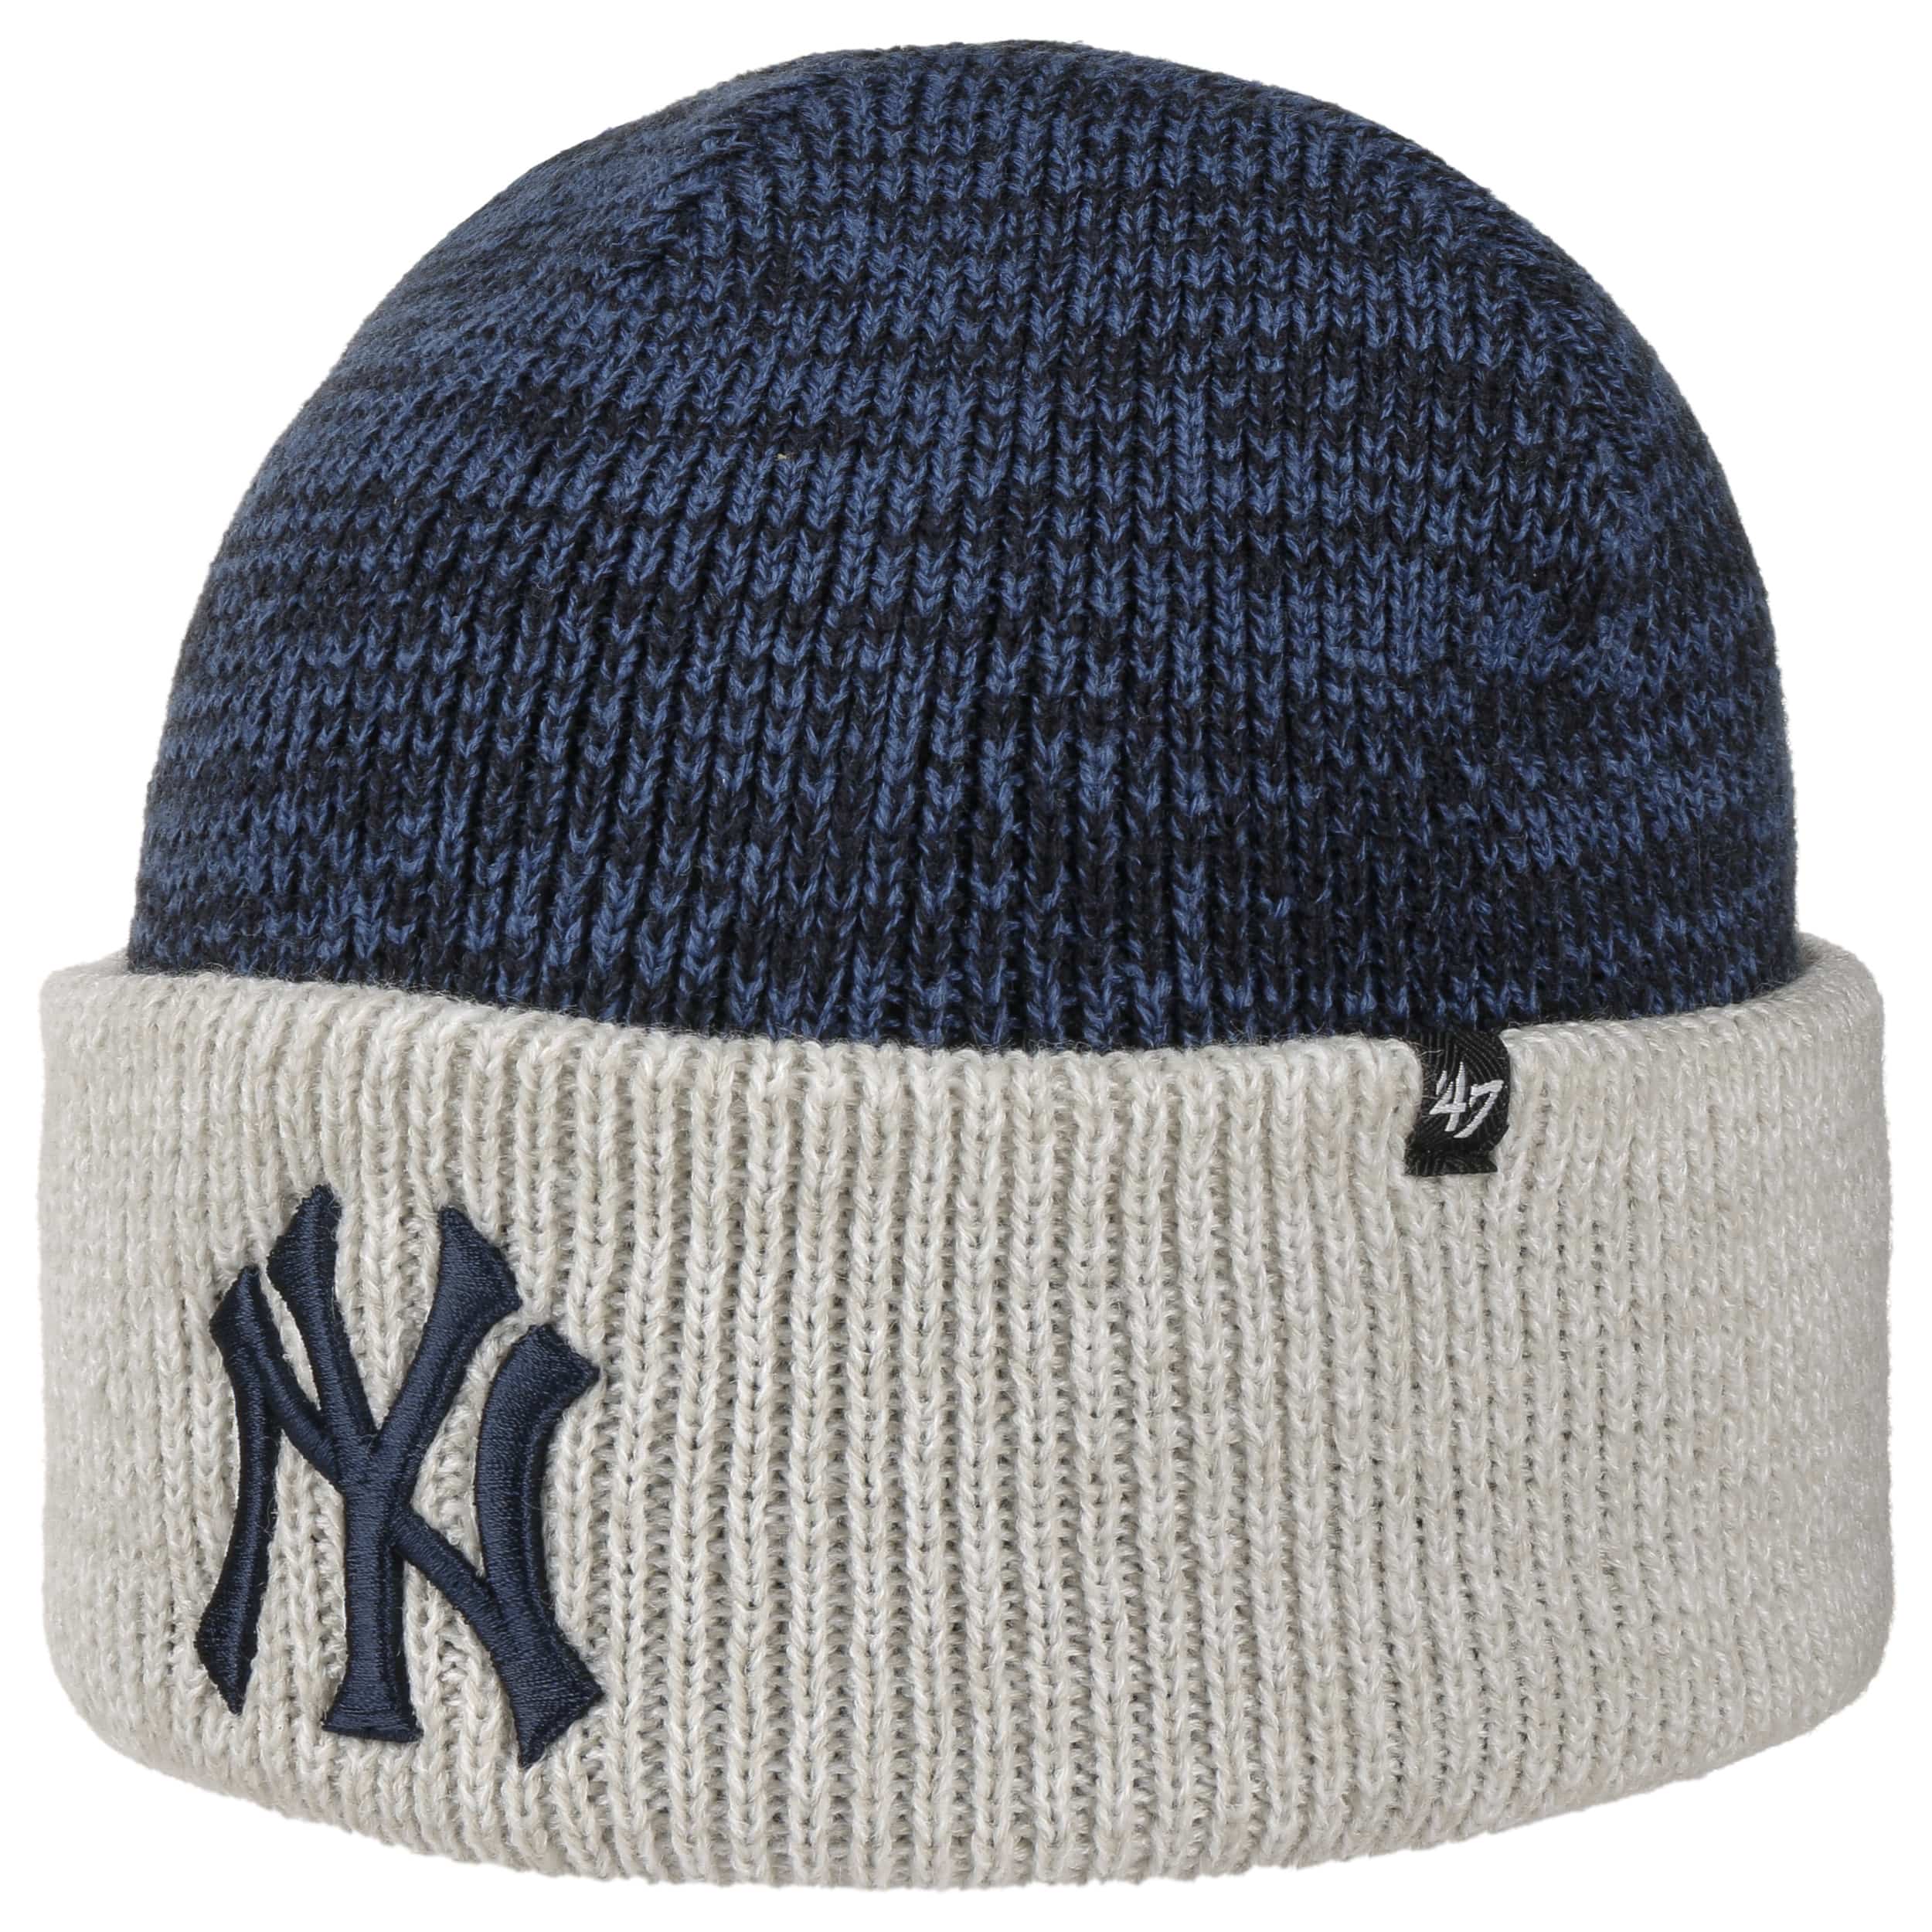 Official MLB Beanies MLB Knit Hats Winter Hats  MLBshopcom